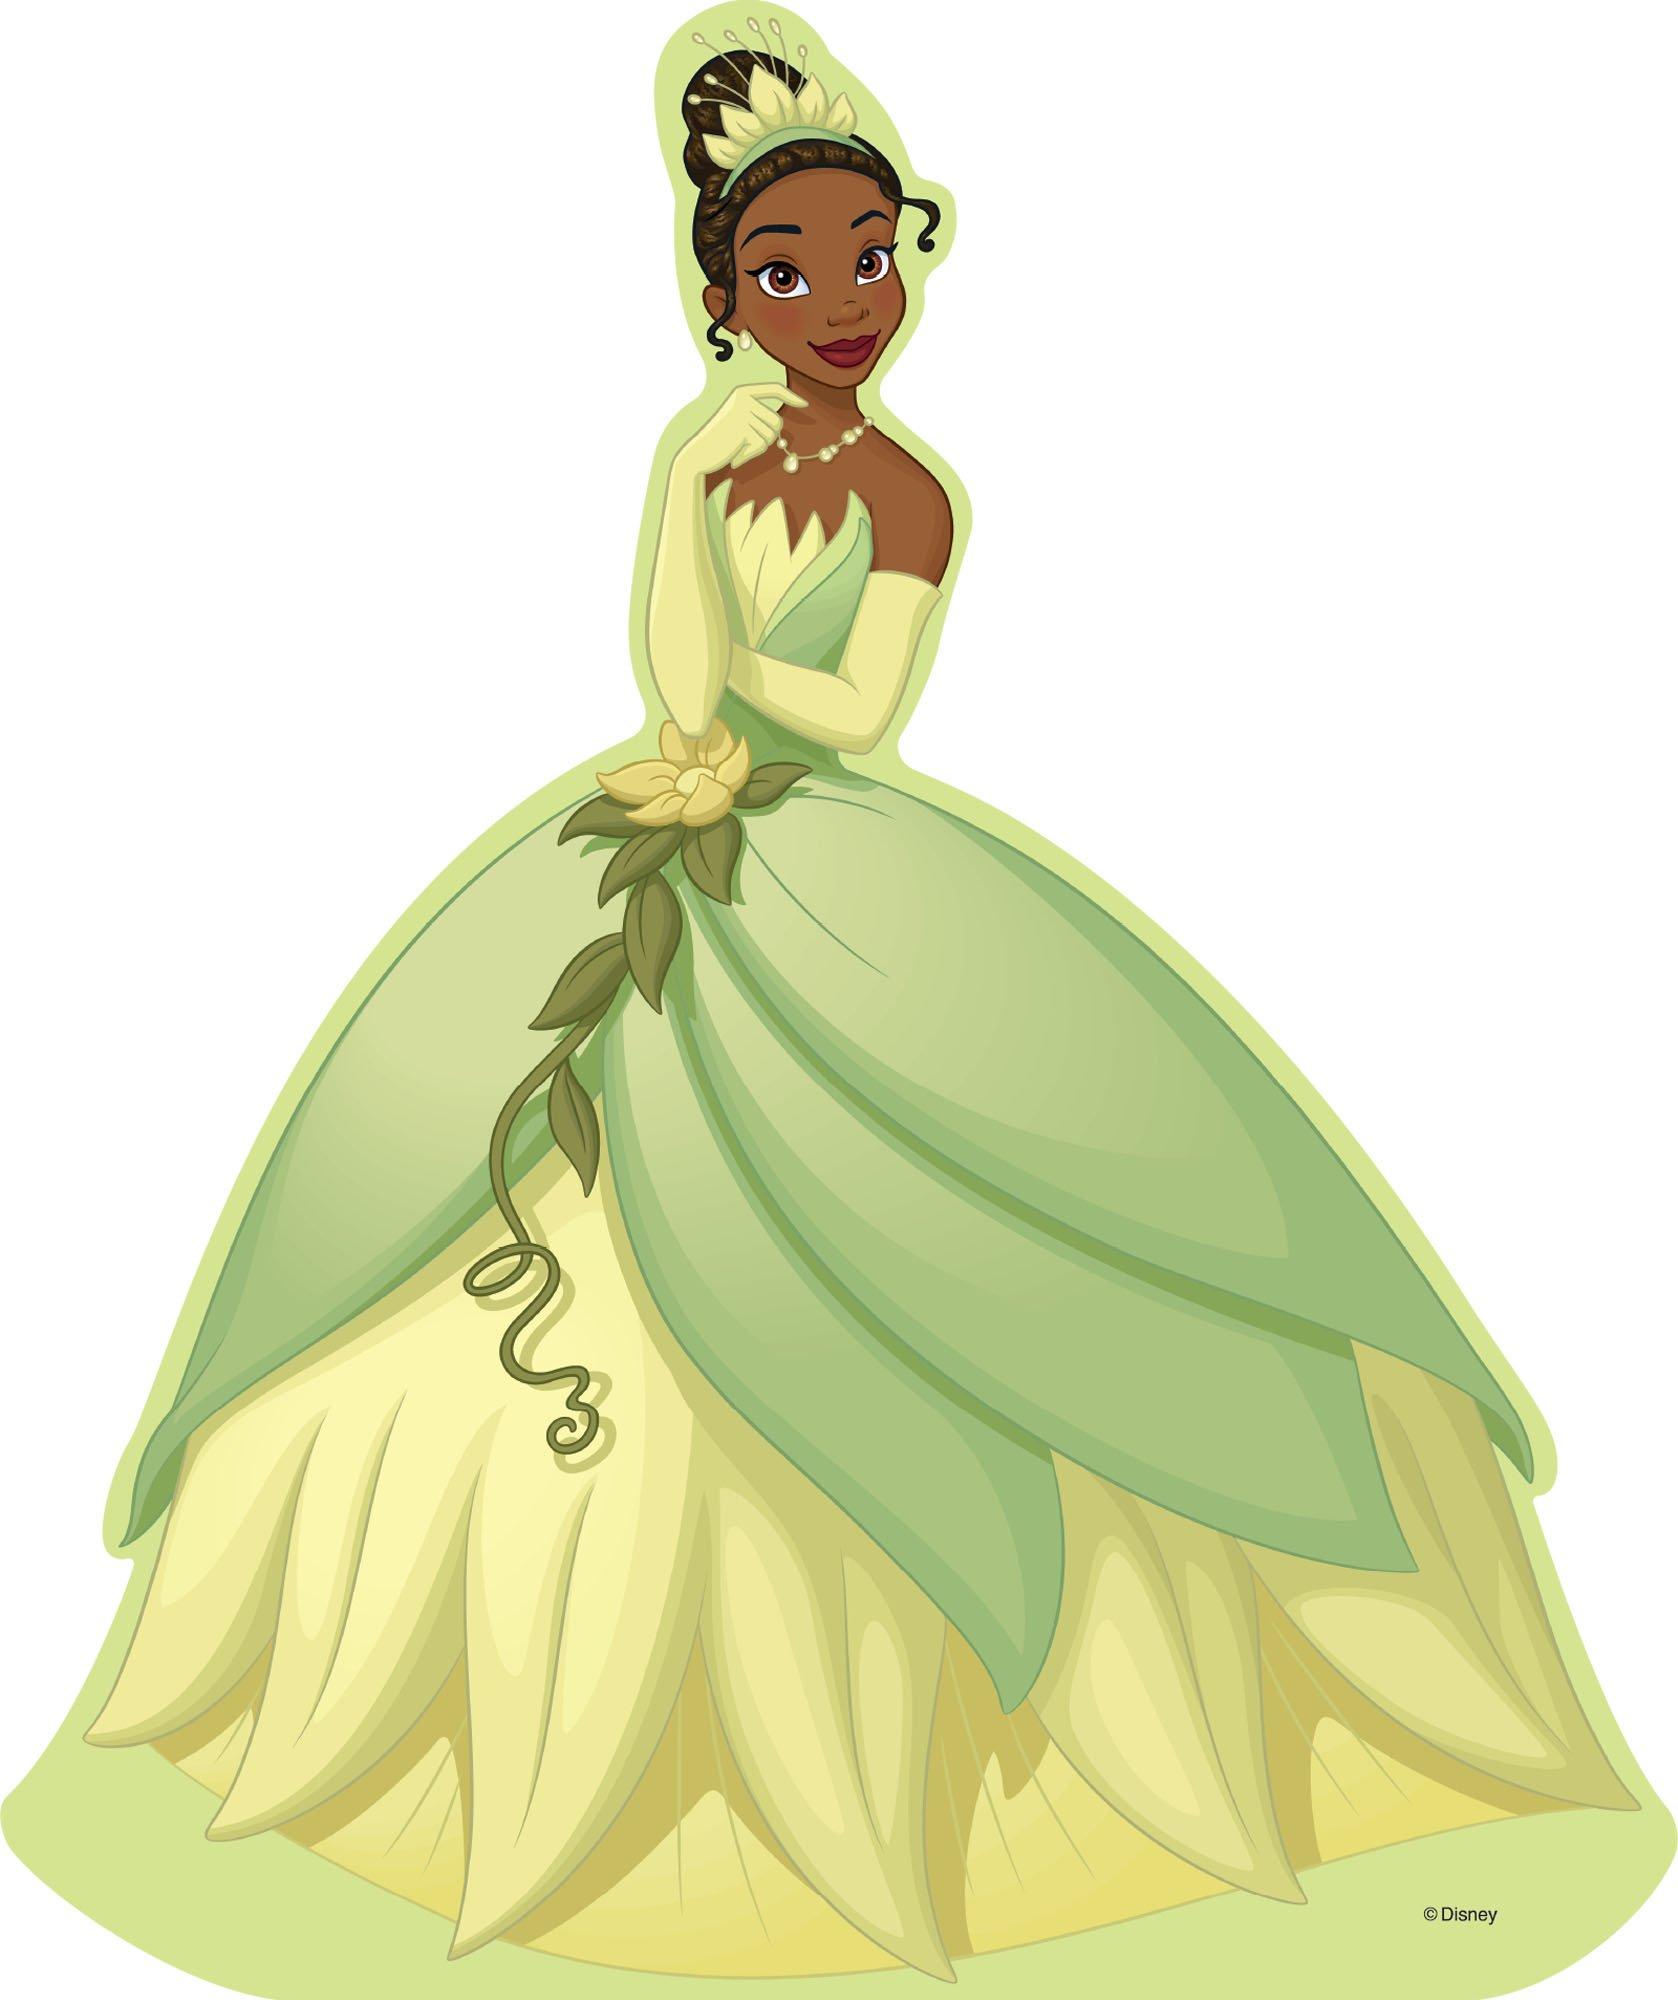 Tiana Cardboard Cutout - Disney The Princess and the Frog